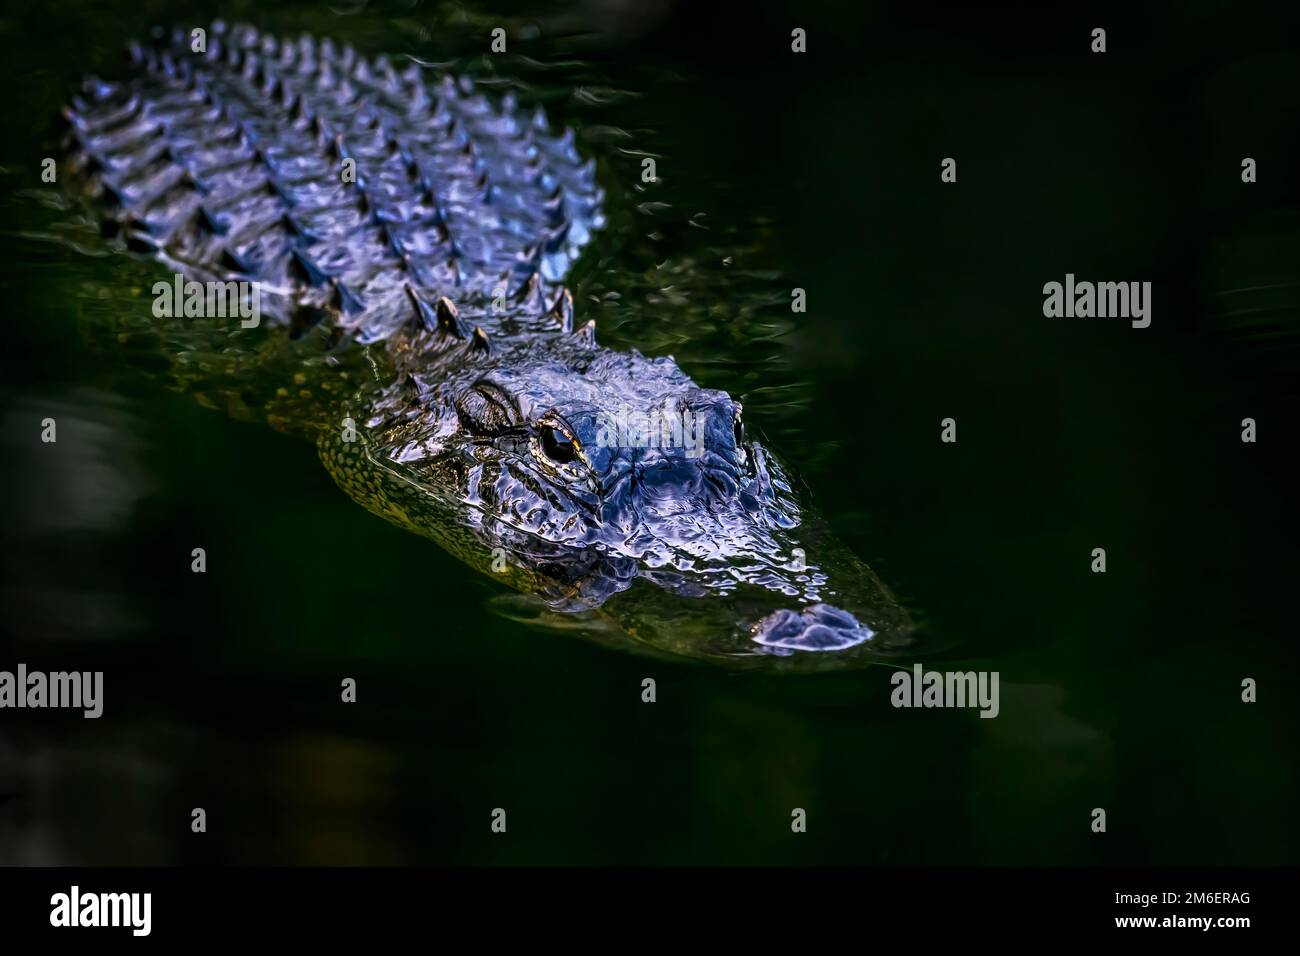 American alligator (Alligator mississippiensis) hiding in dark water, Big Cypress national reserve, Florida, United States. Stock Photo